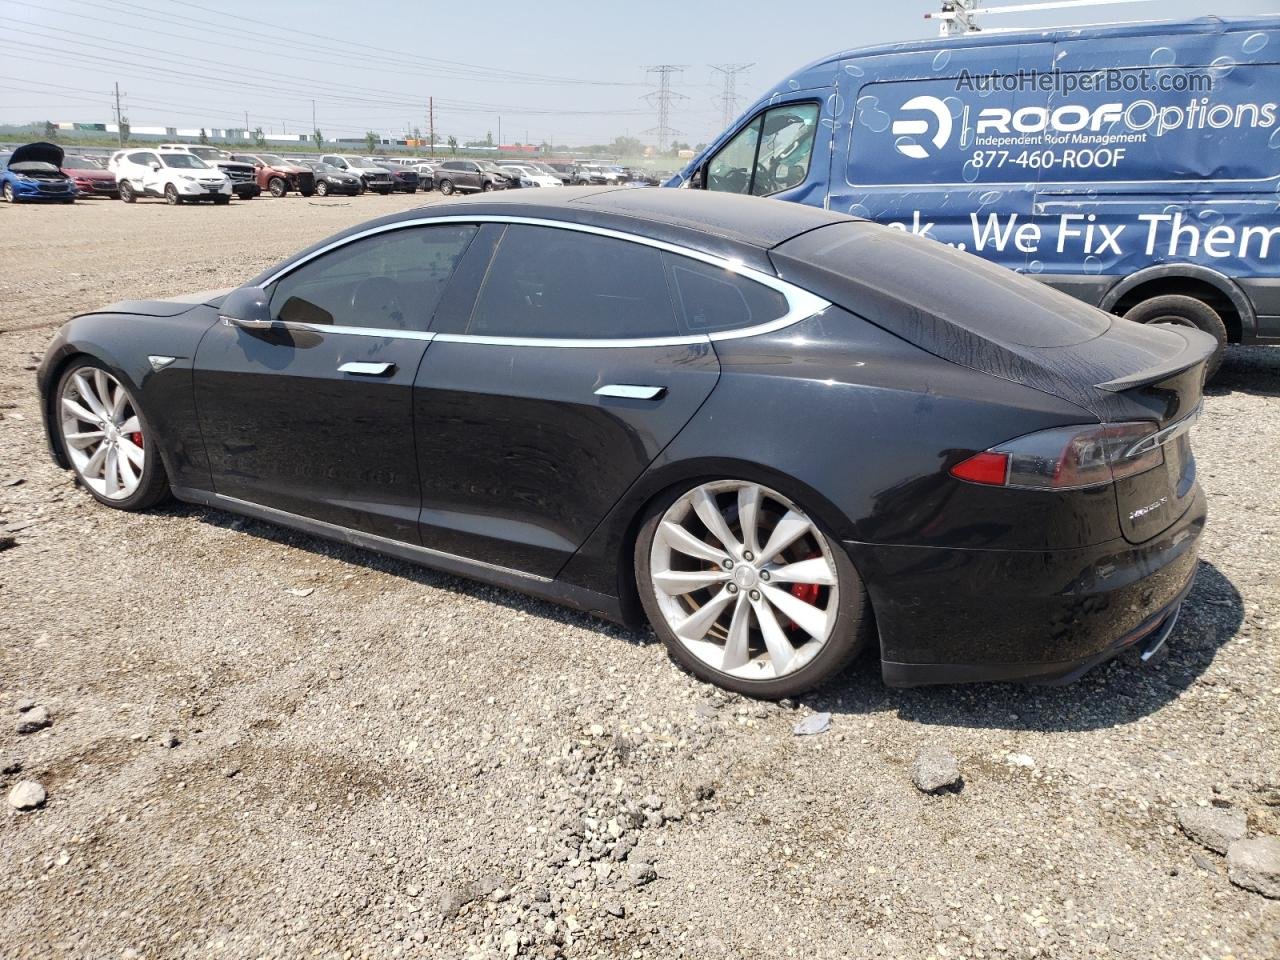 2014 Tesla Model S  Black vin: 5YJSA1H23EFP62720